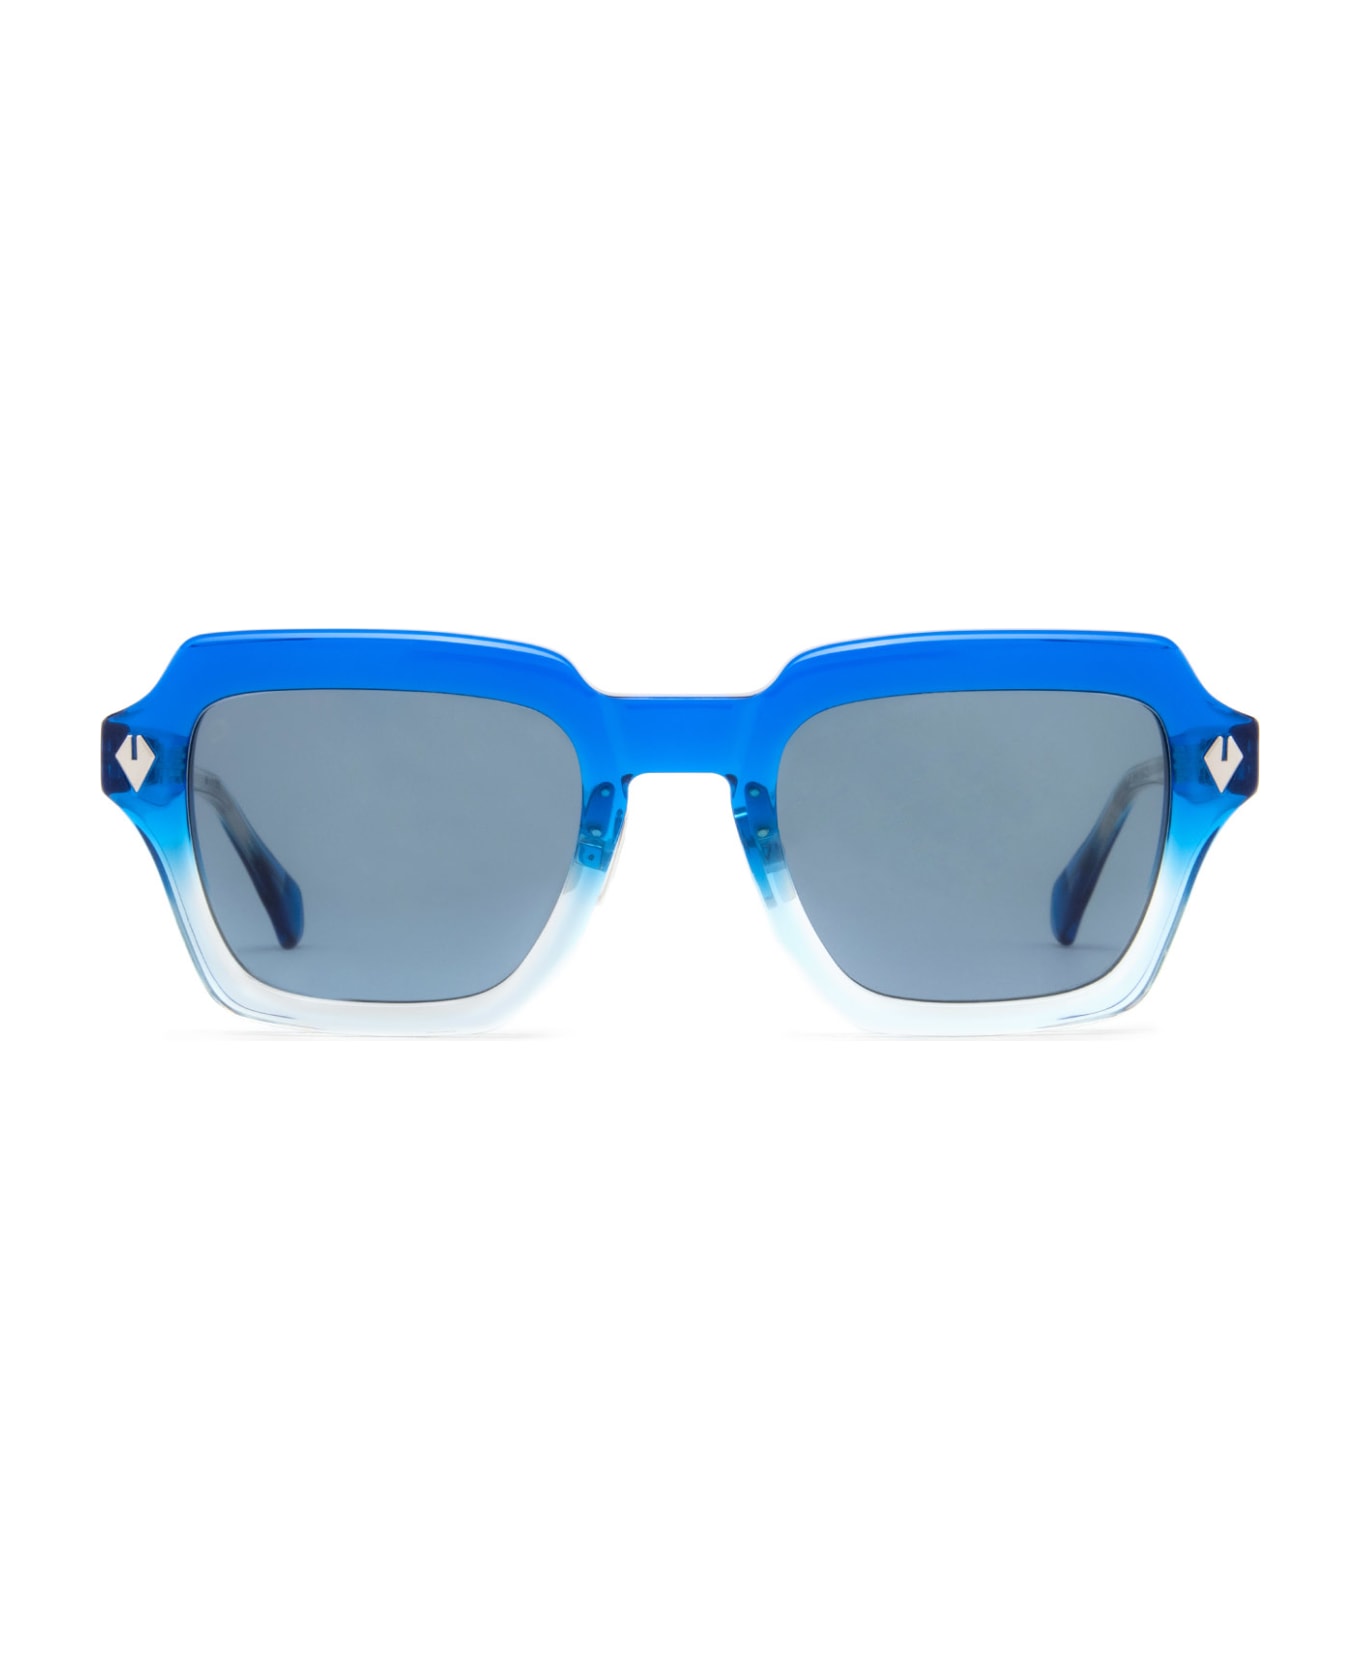 T Henri Continental Santorini Sunglasses サングラス